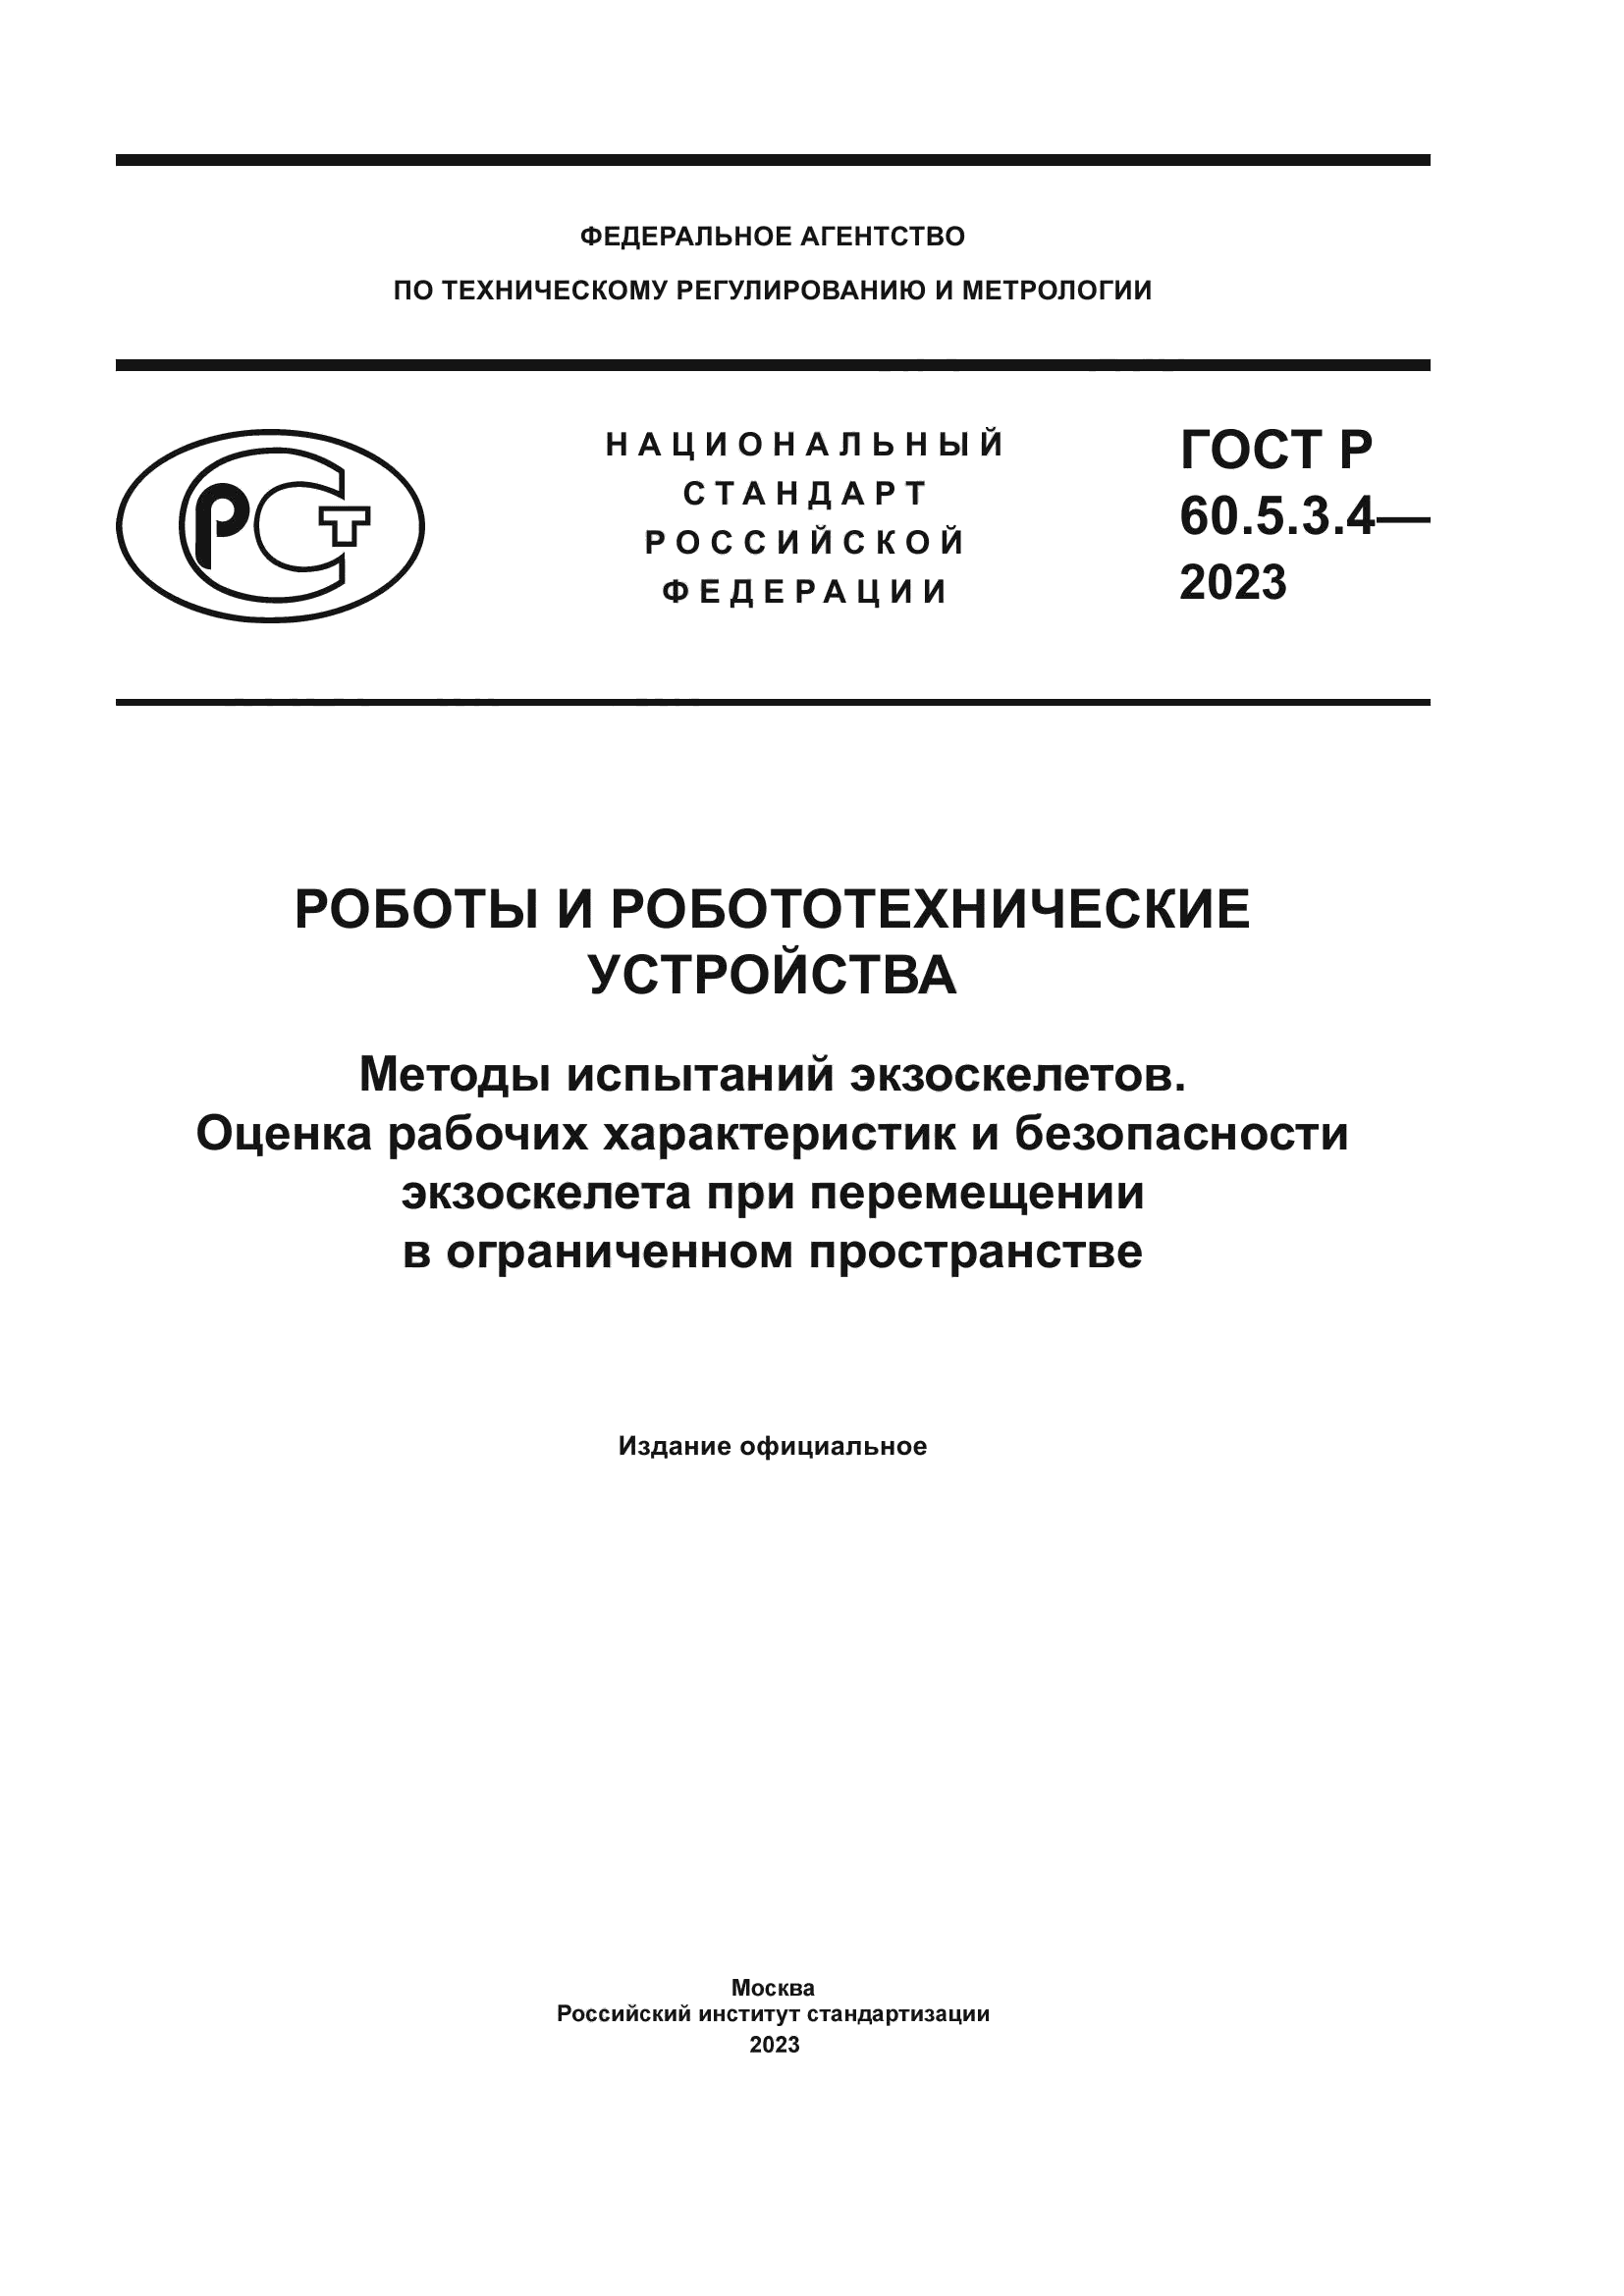 ГОСТ Р 60.5.3.4-2023